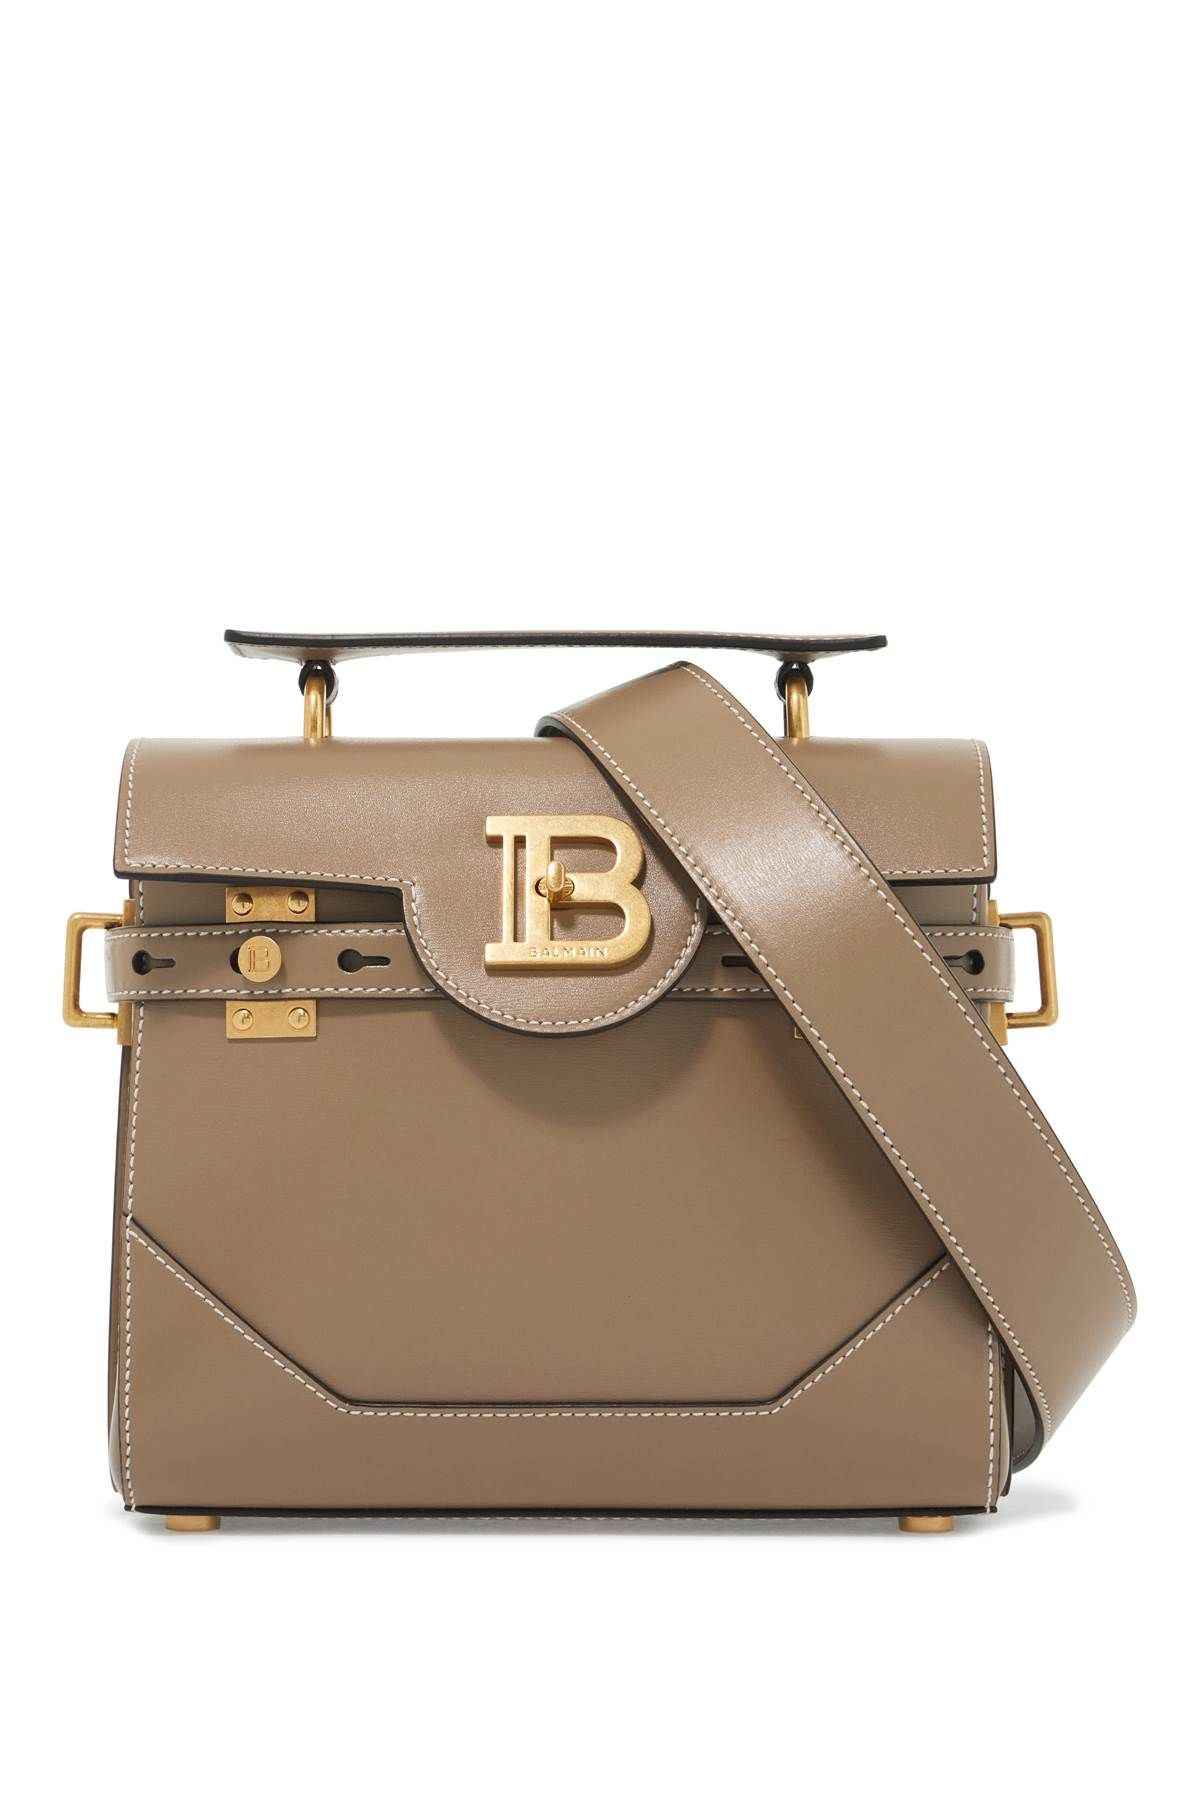 Balmain BALMAIN b-buzz 23 handbag